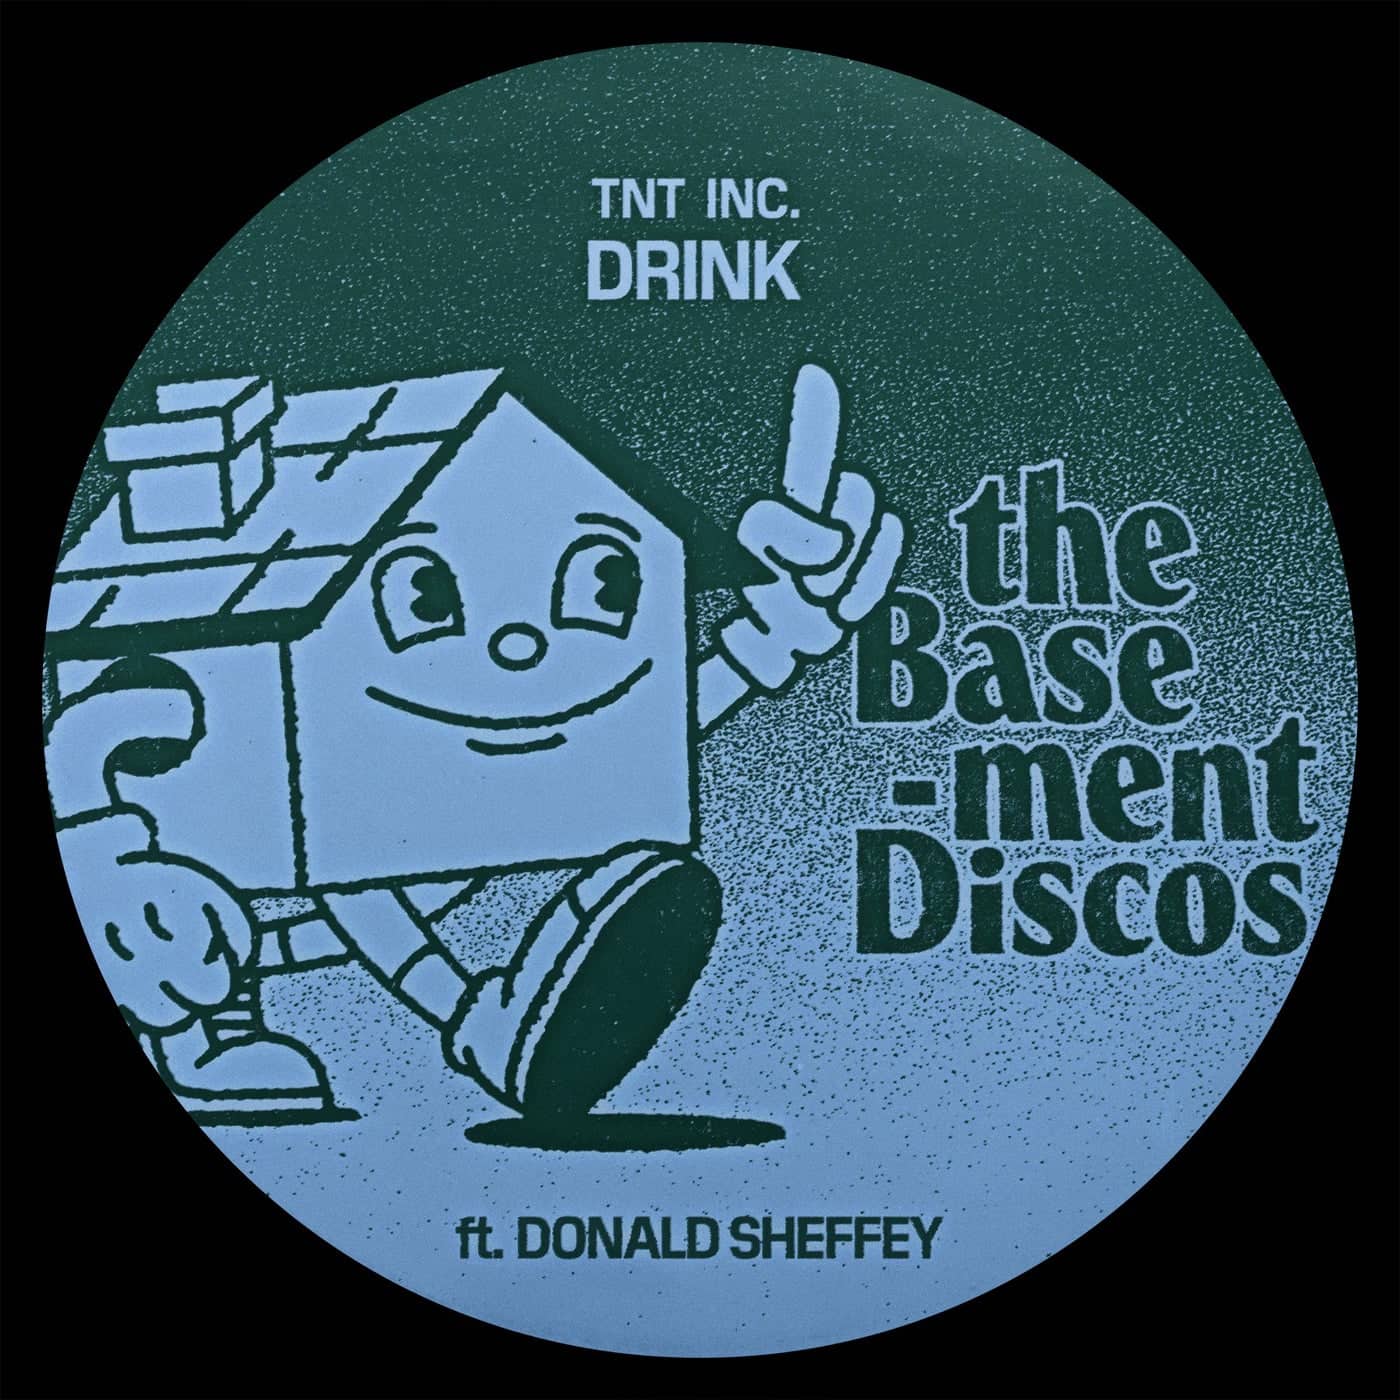 image cover: TNT Inc., Donald Sheffey - Drink (Remixes) on theBasement Discos